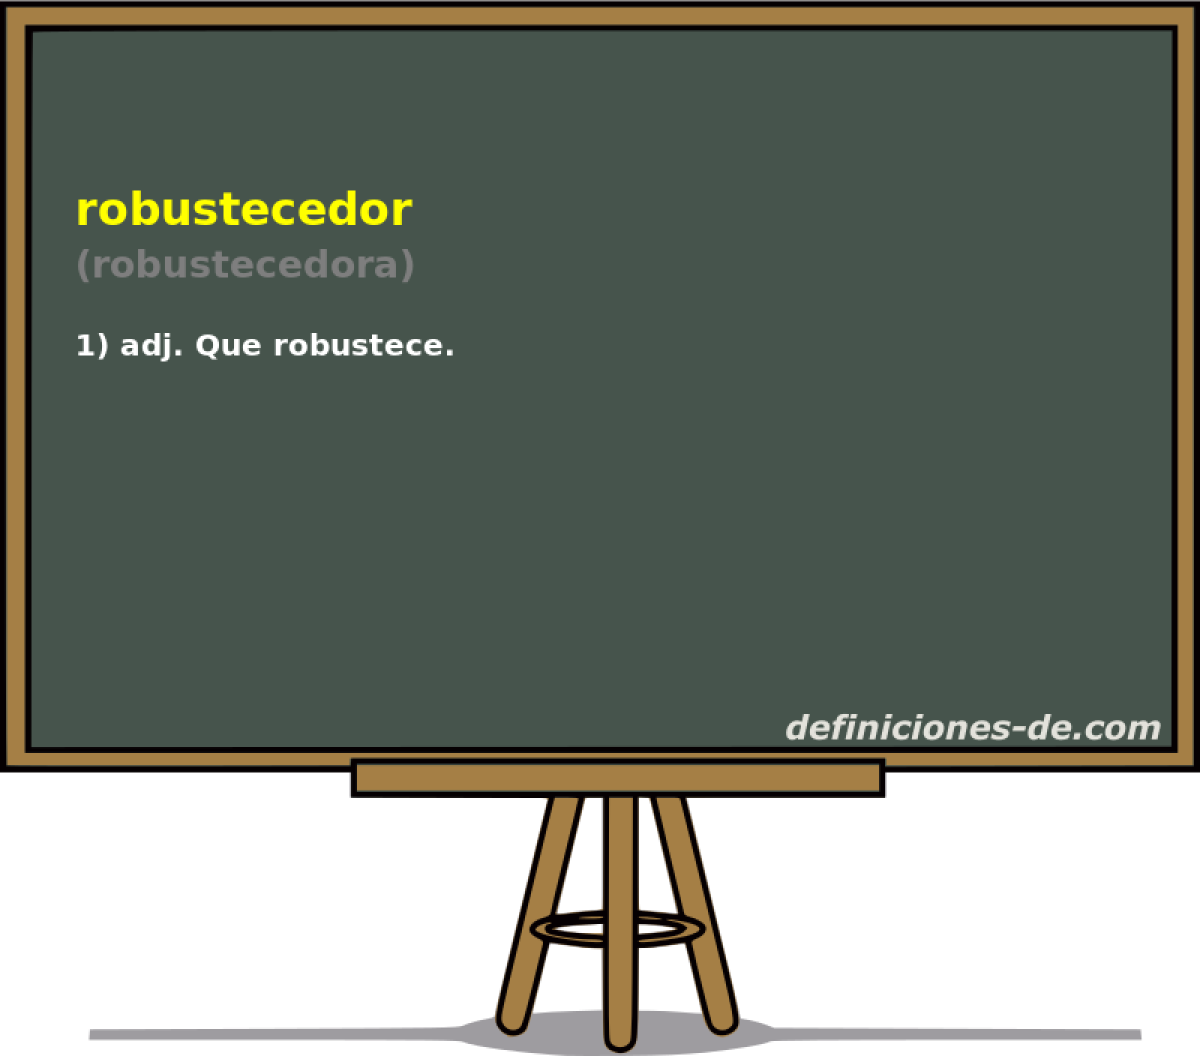 robustecedor (robustecedora)